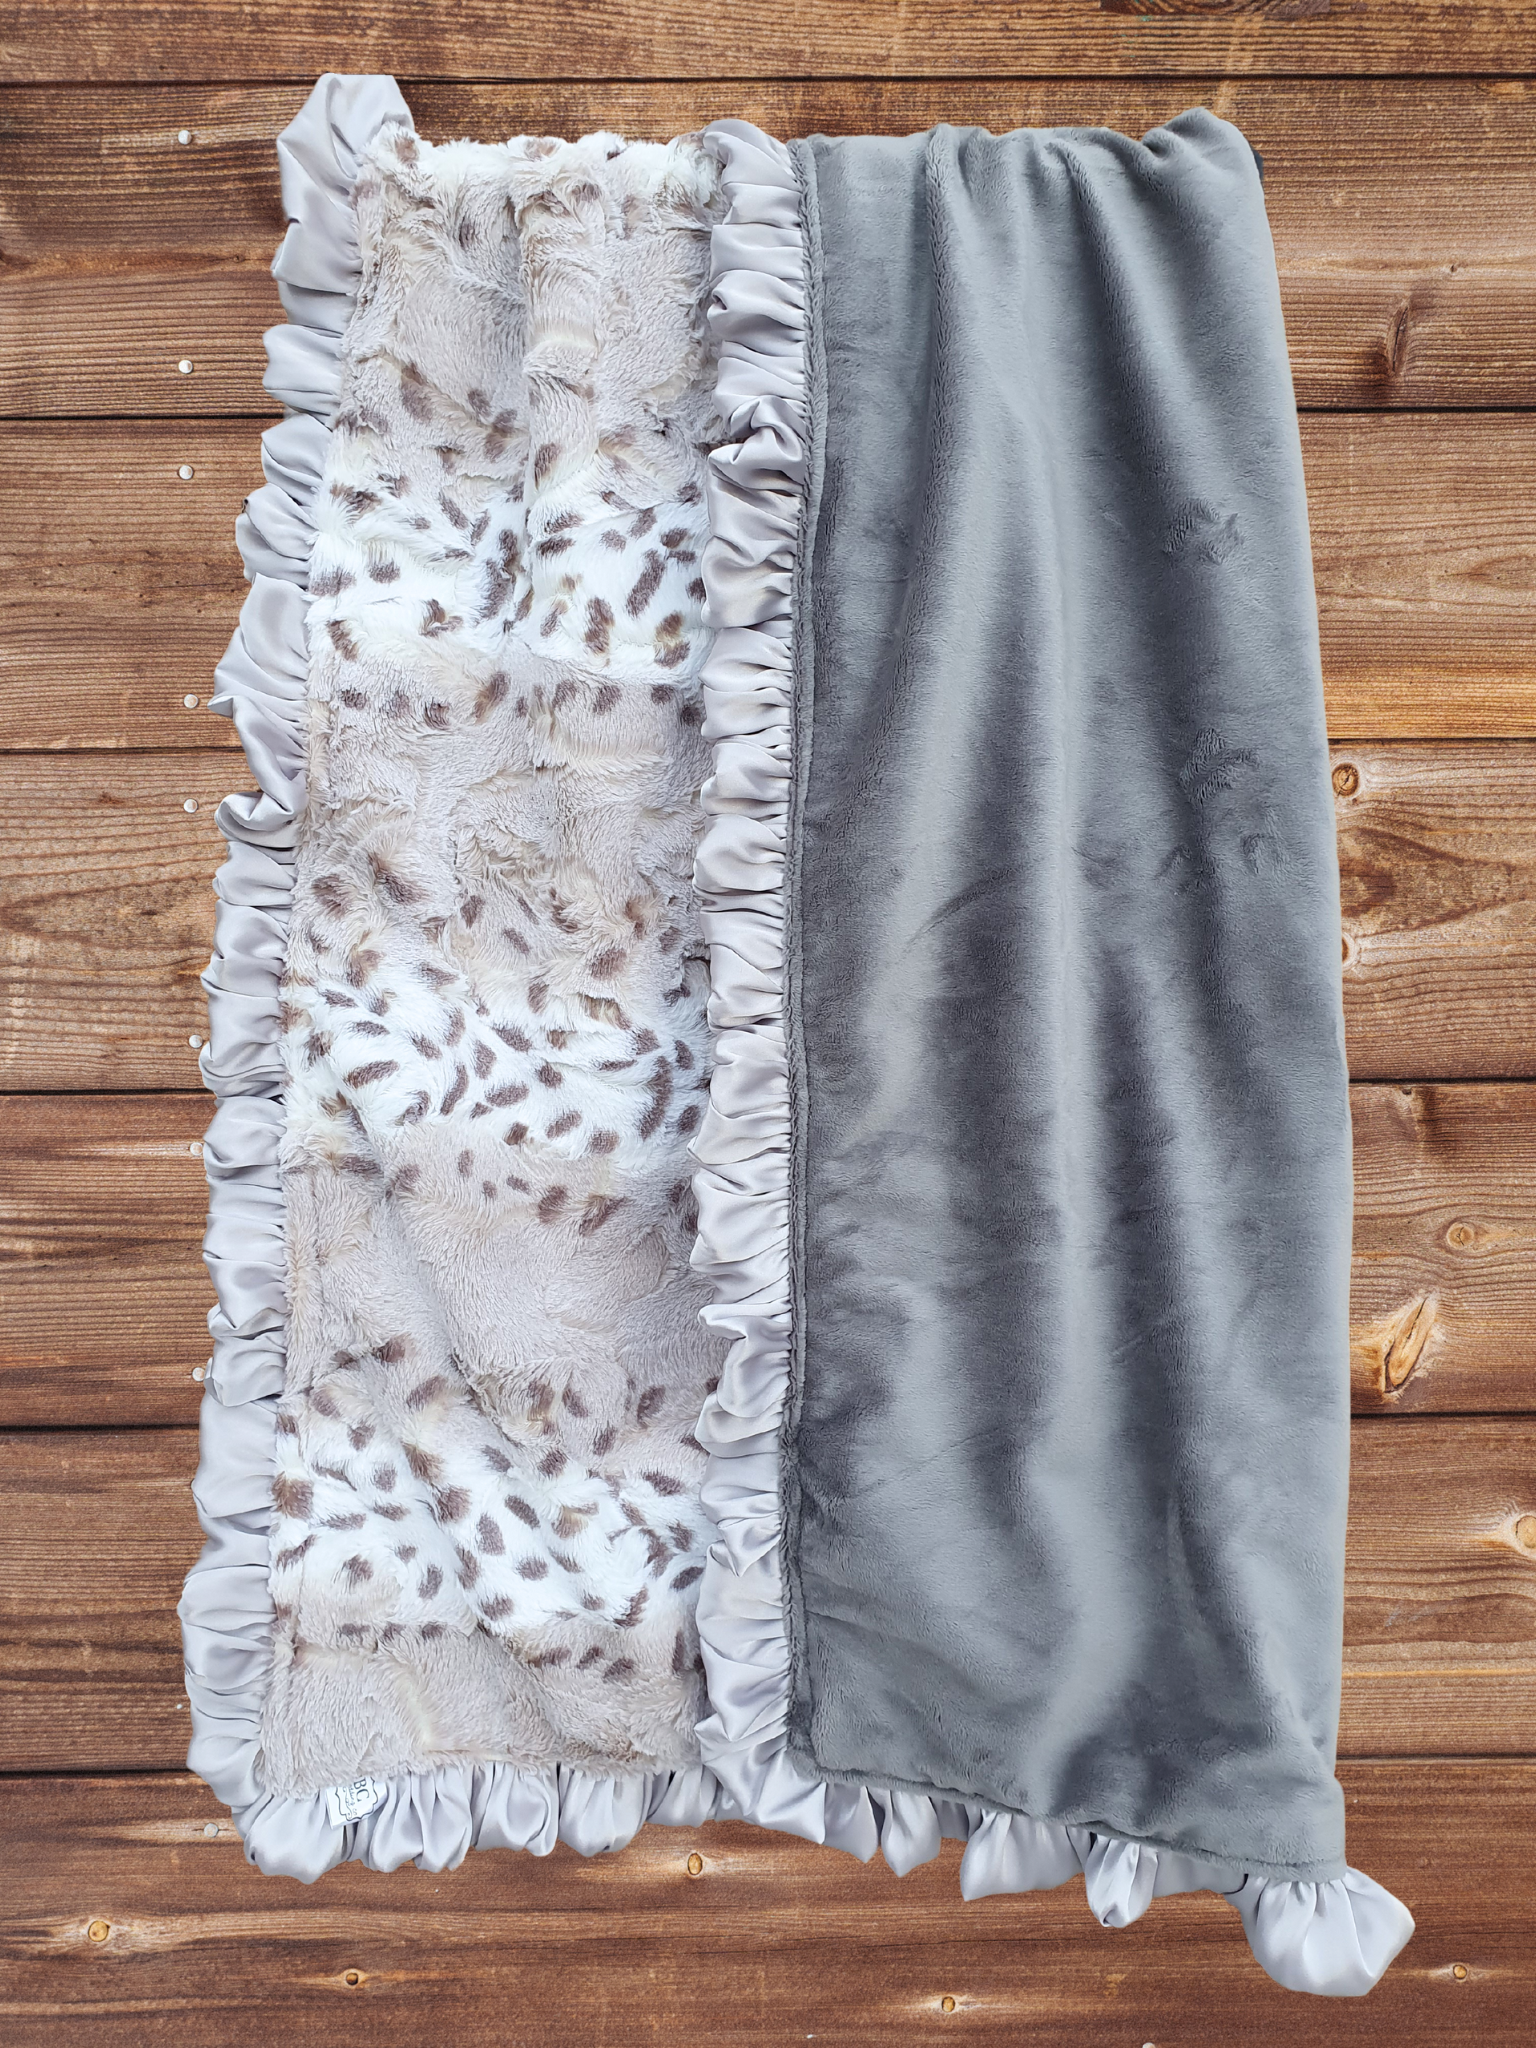 Baby Ruffle Blanket - Lynx Minky and Gray Minky Blanket - DBC Baby Bedding Co 